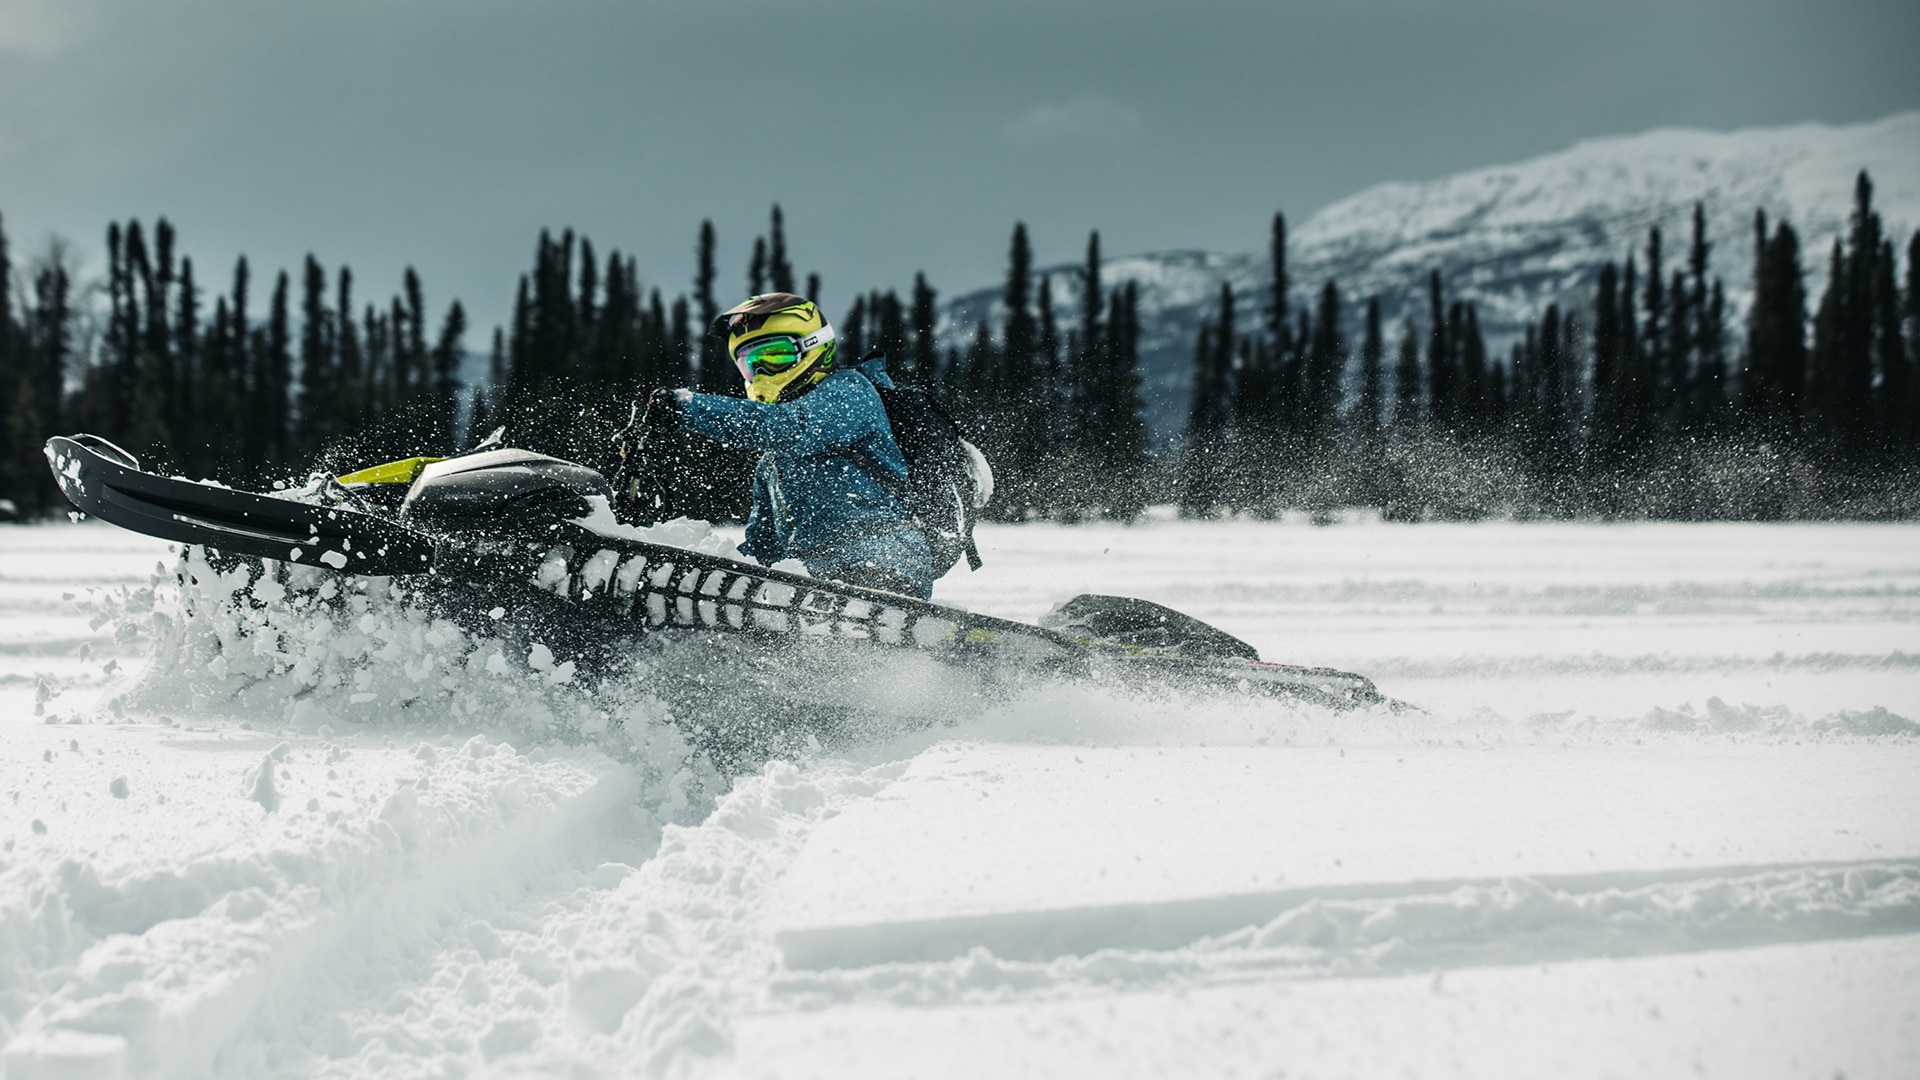 A Ski-Doo rider kicking up snow